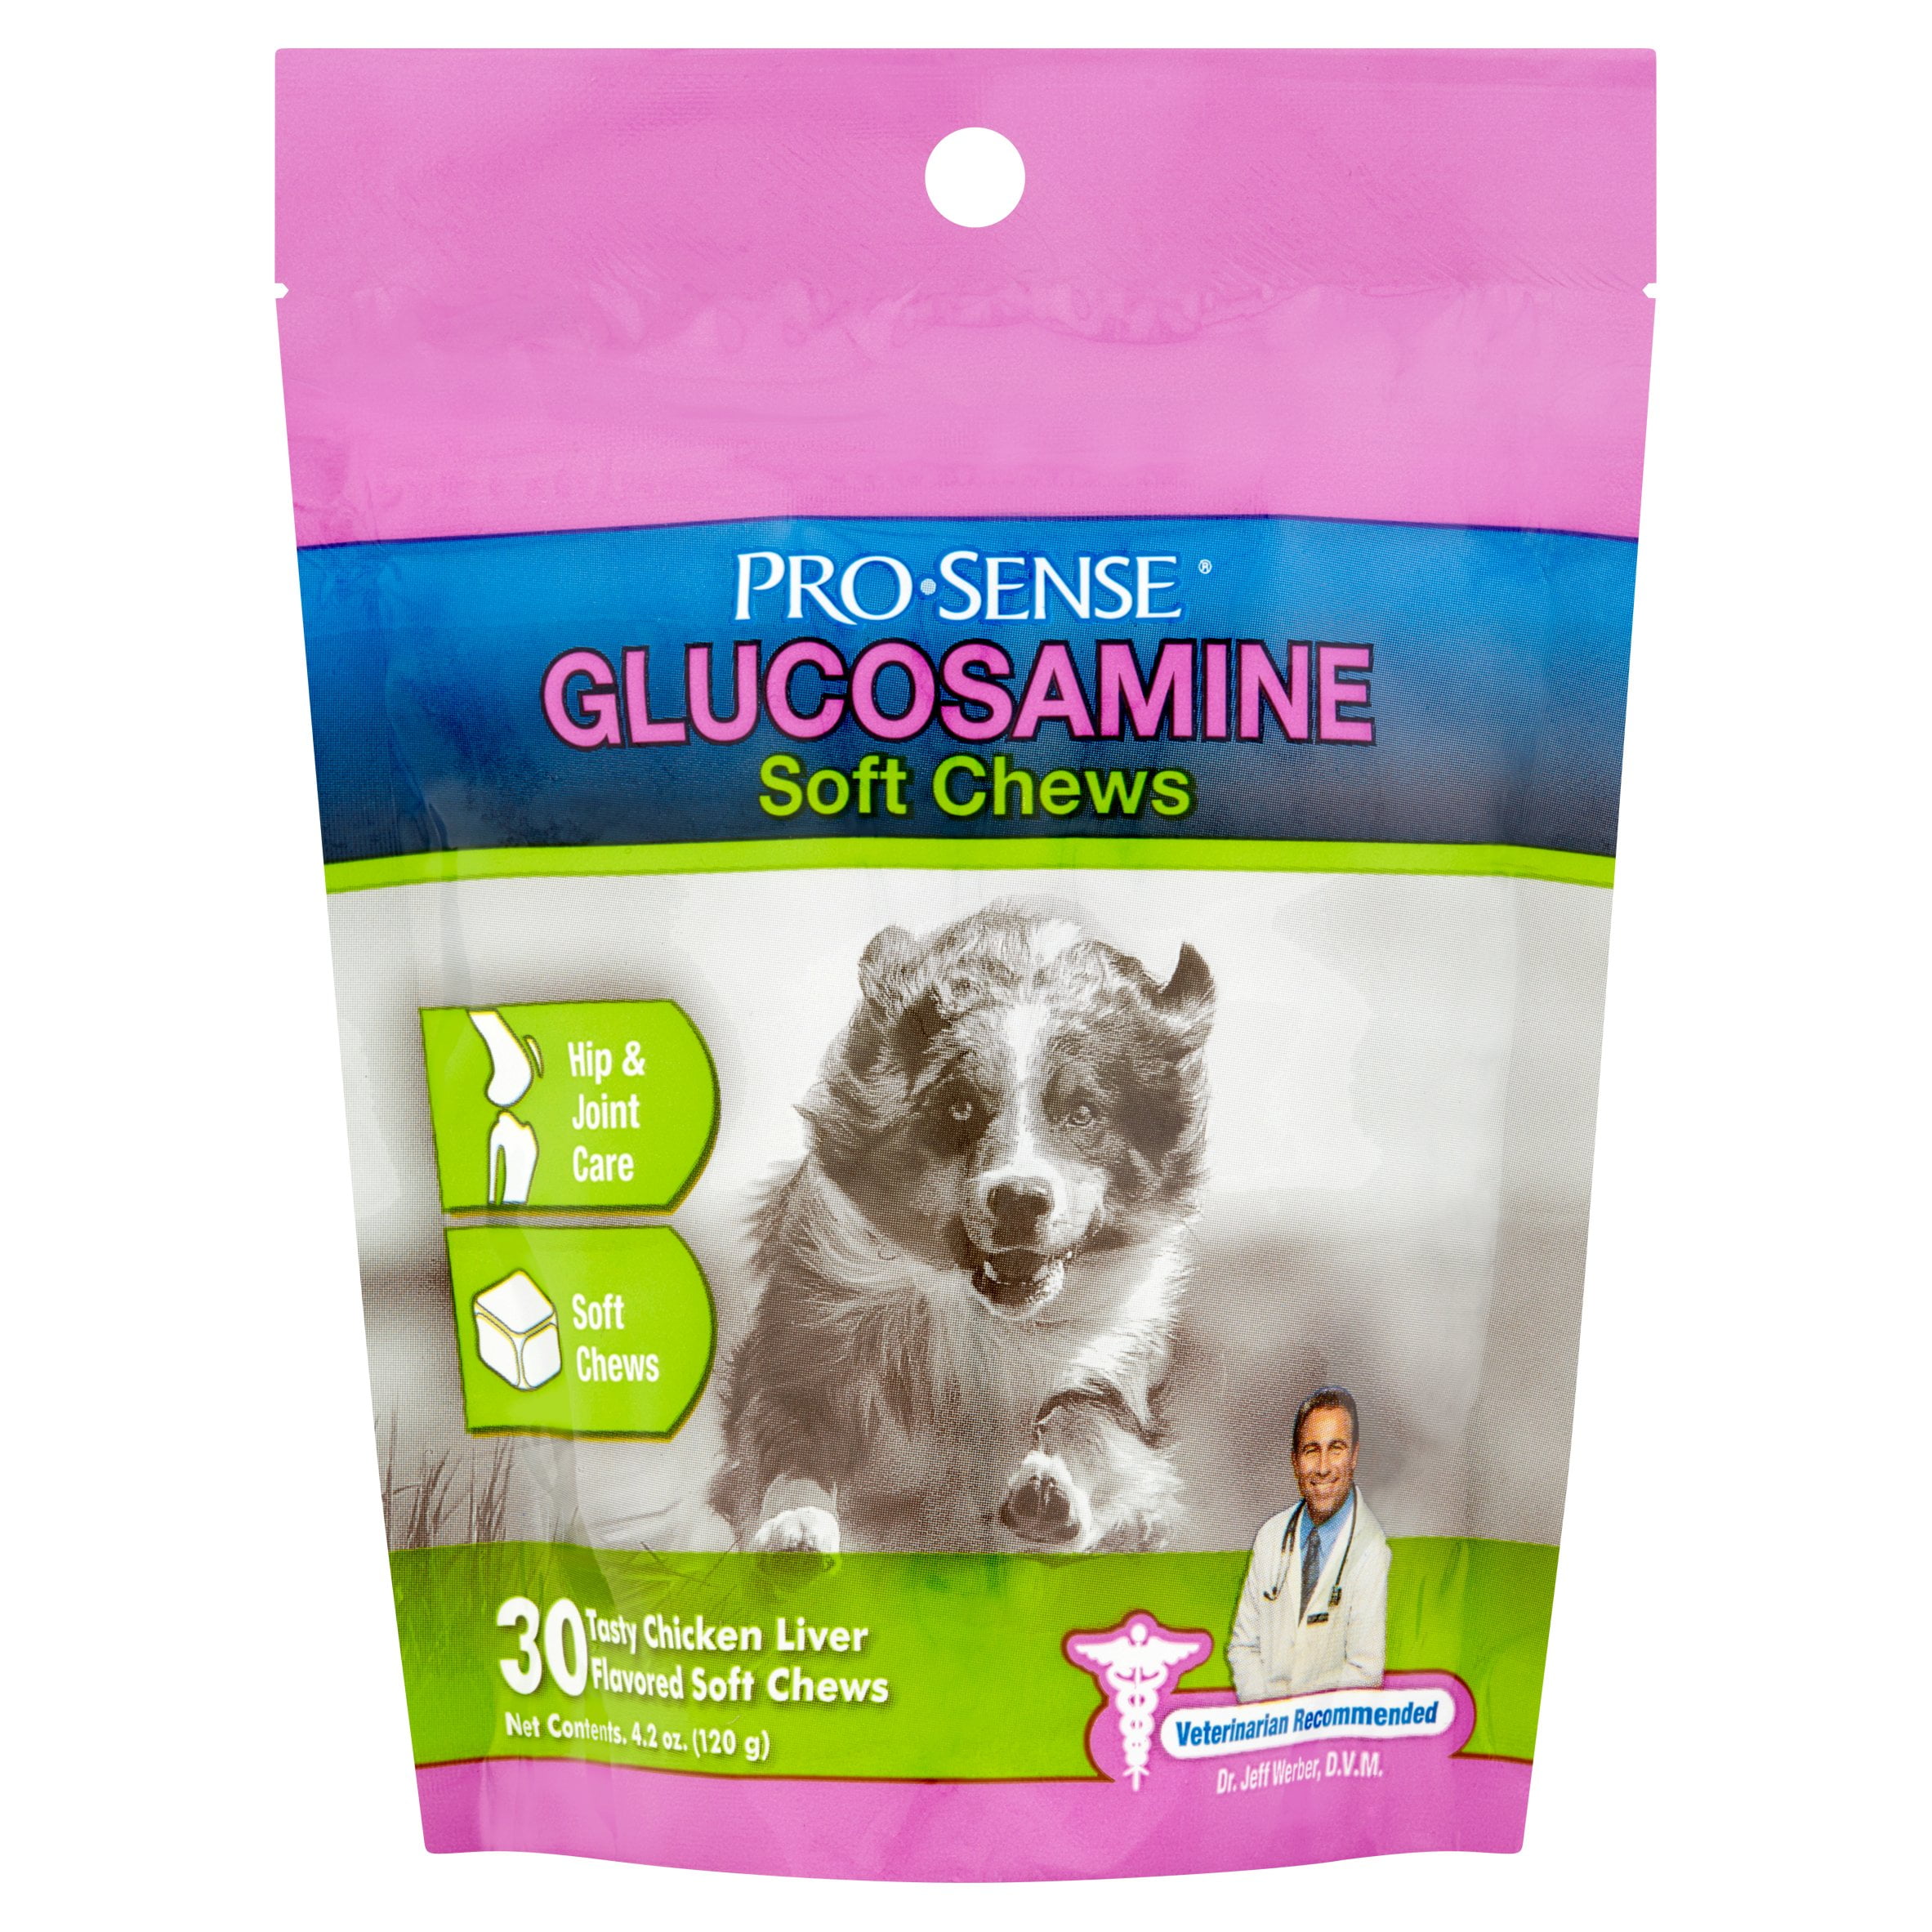 Can I give my glucosamine to my dog?